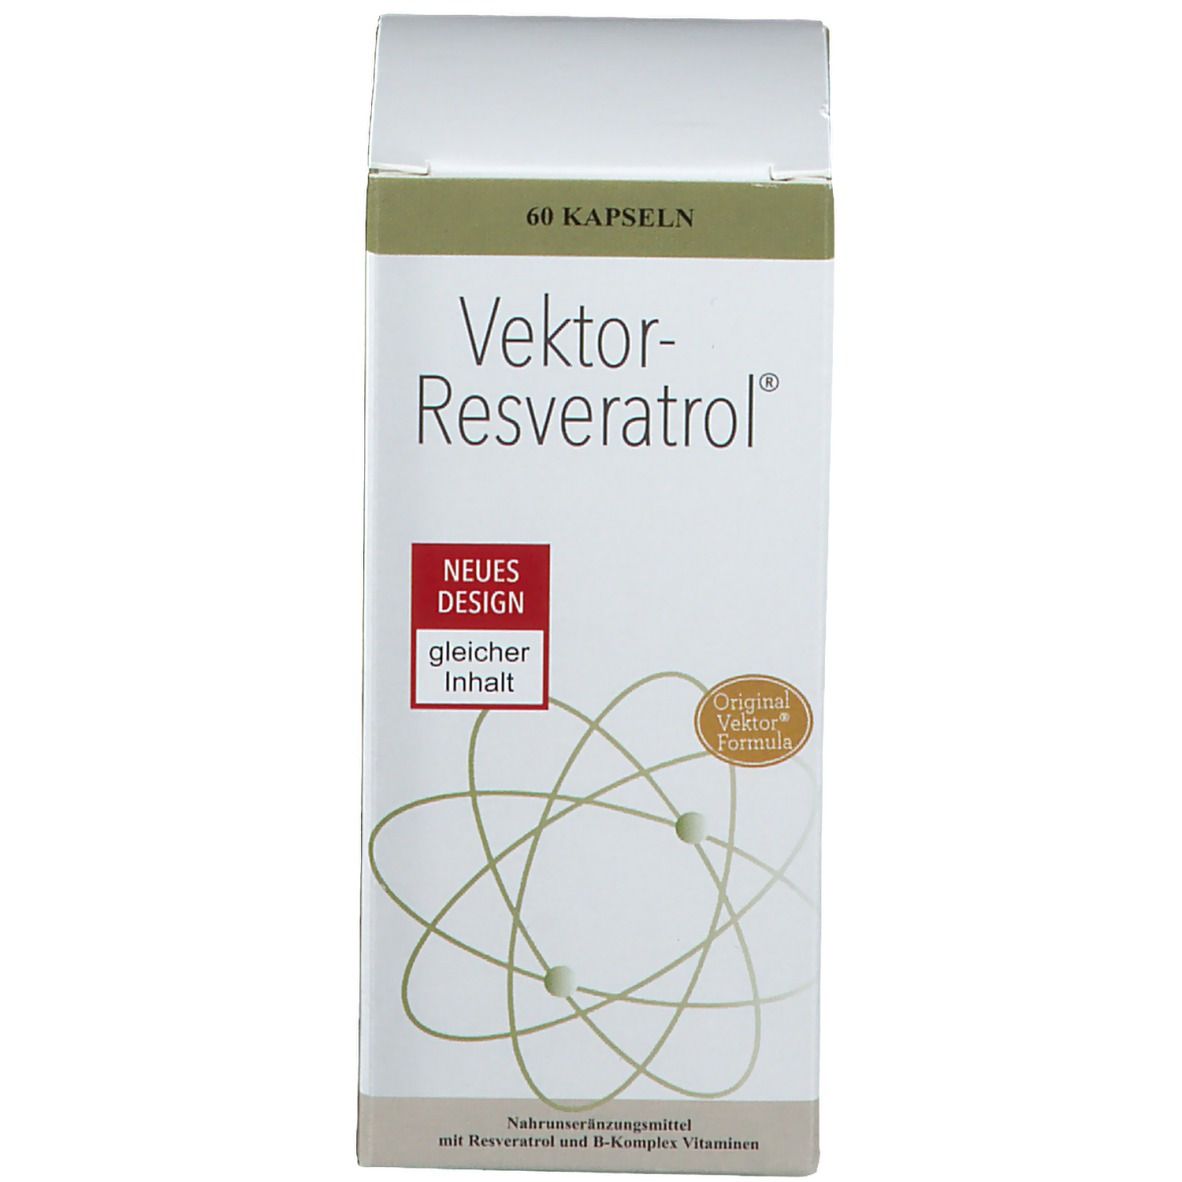 Vektor-Resveratrol® Kapseln